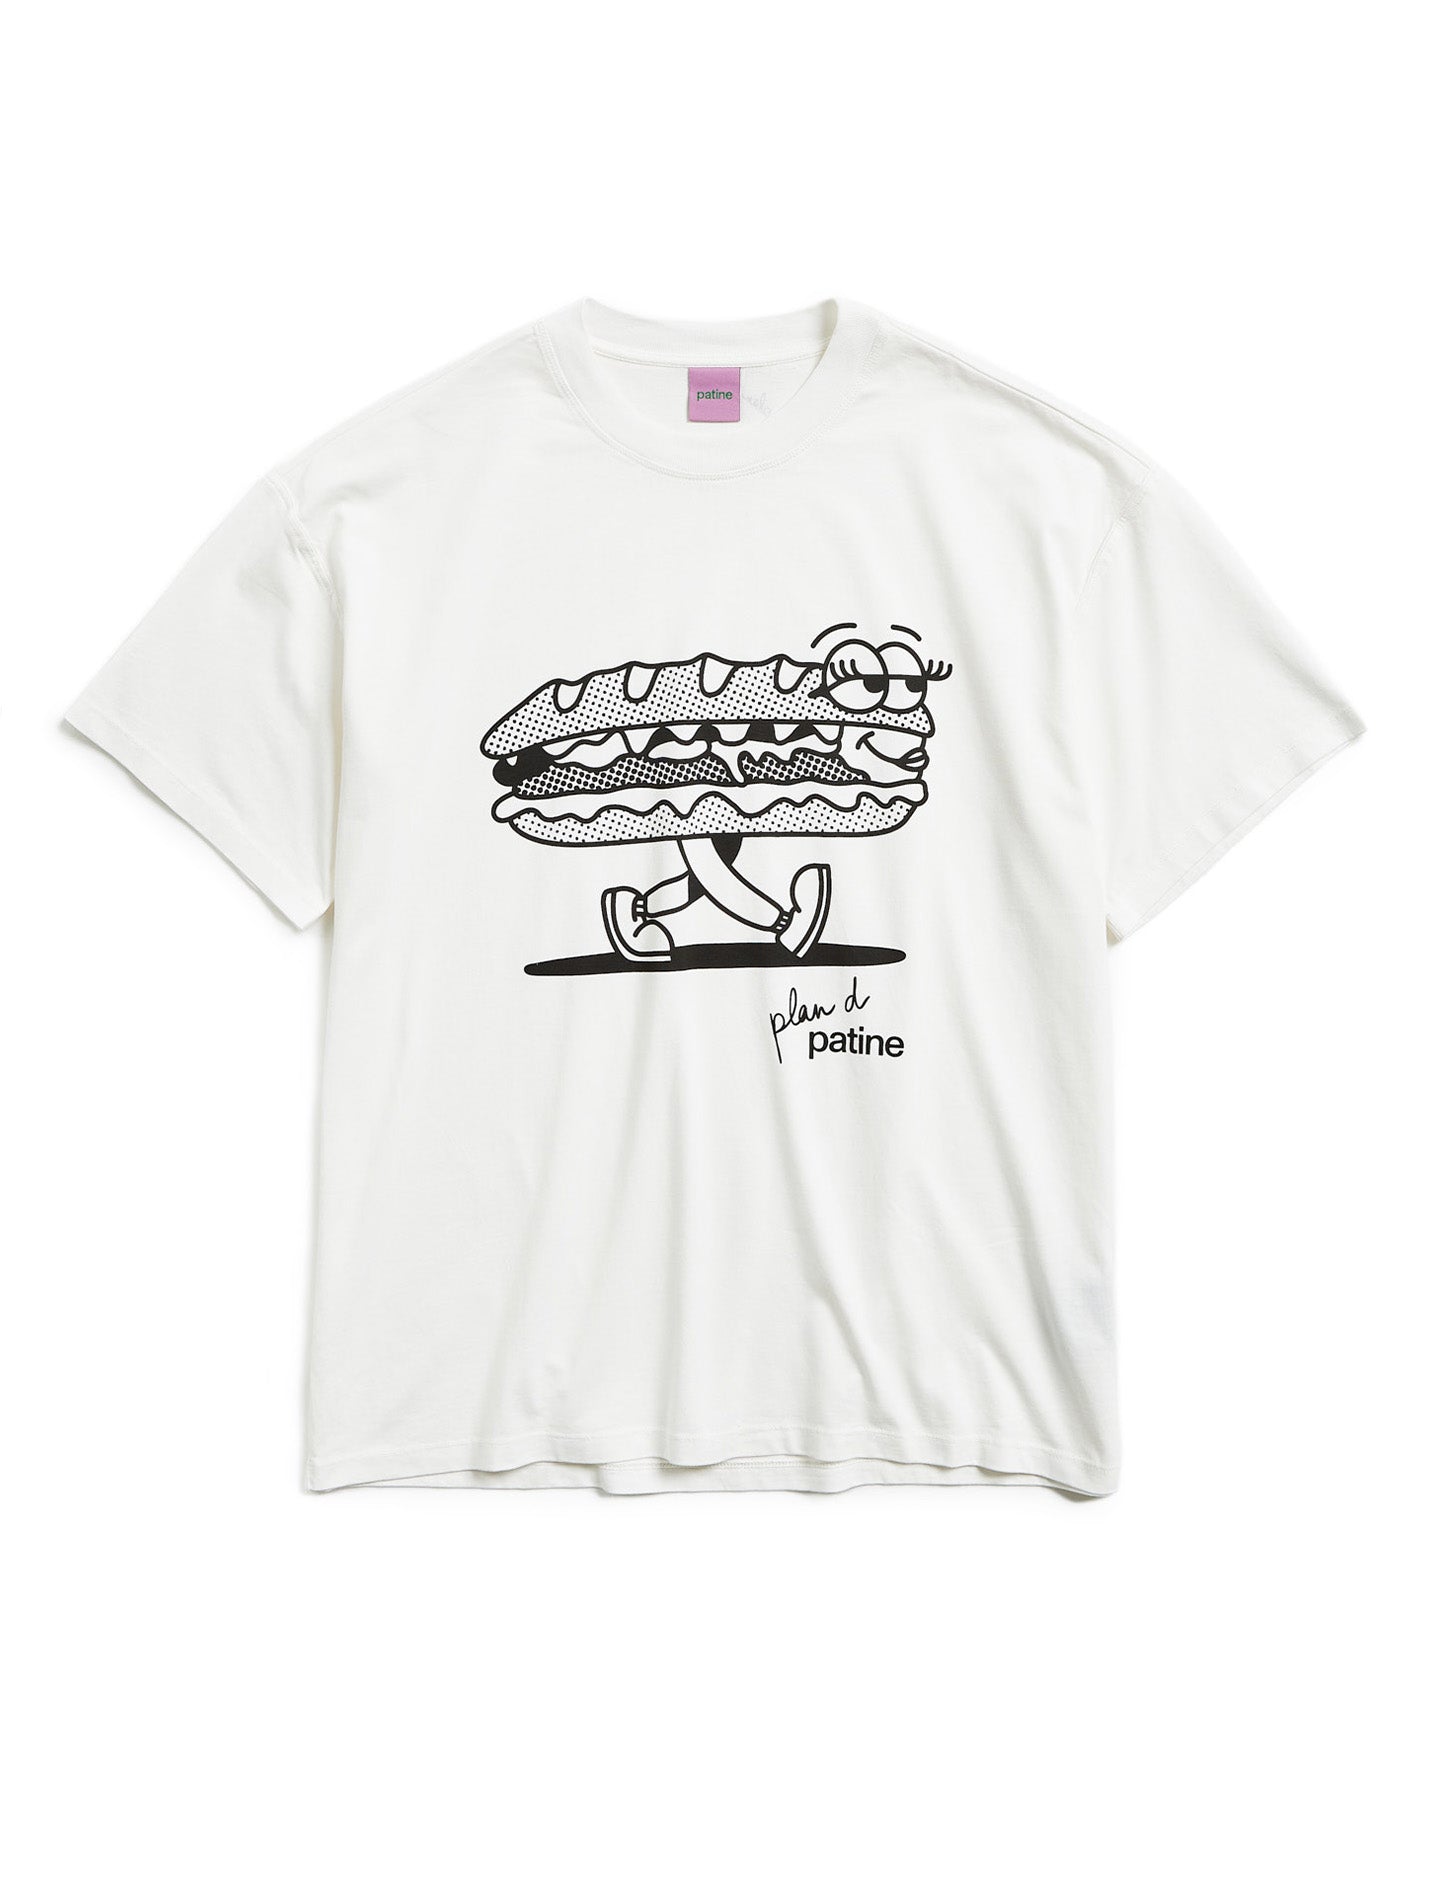 Le tee-shirt Super Willie® jersey bio-recyclé Dwich - collector